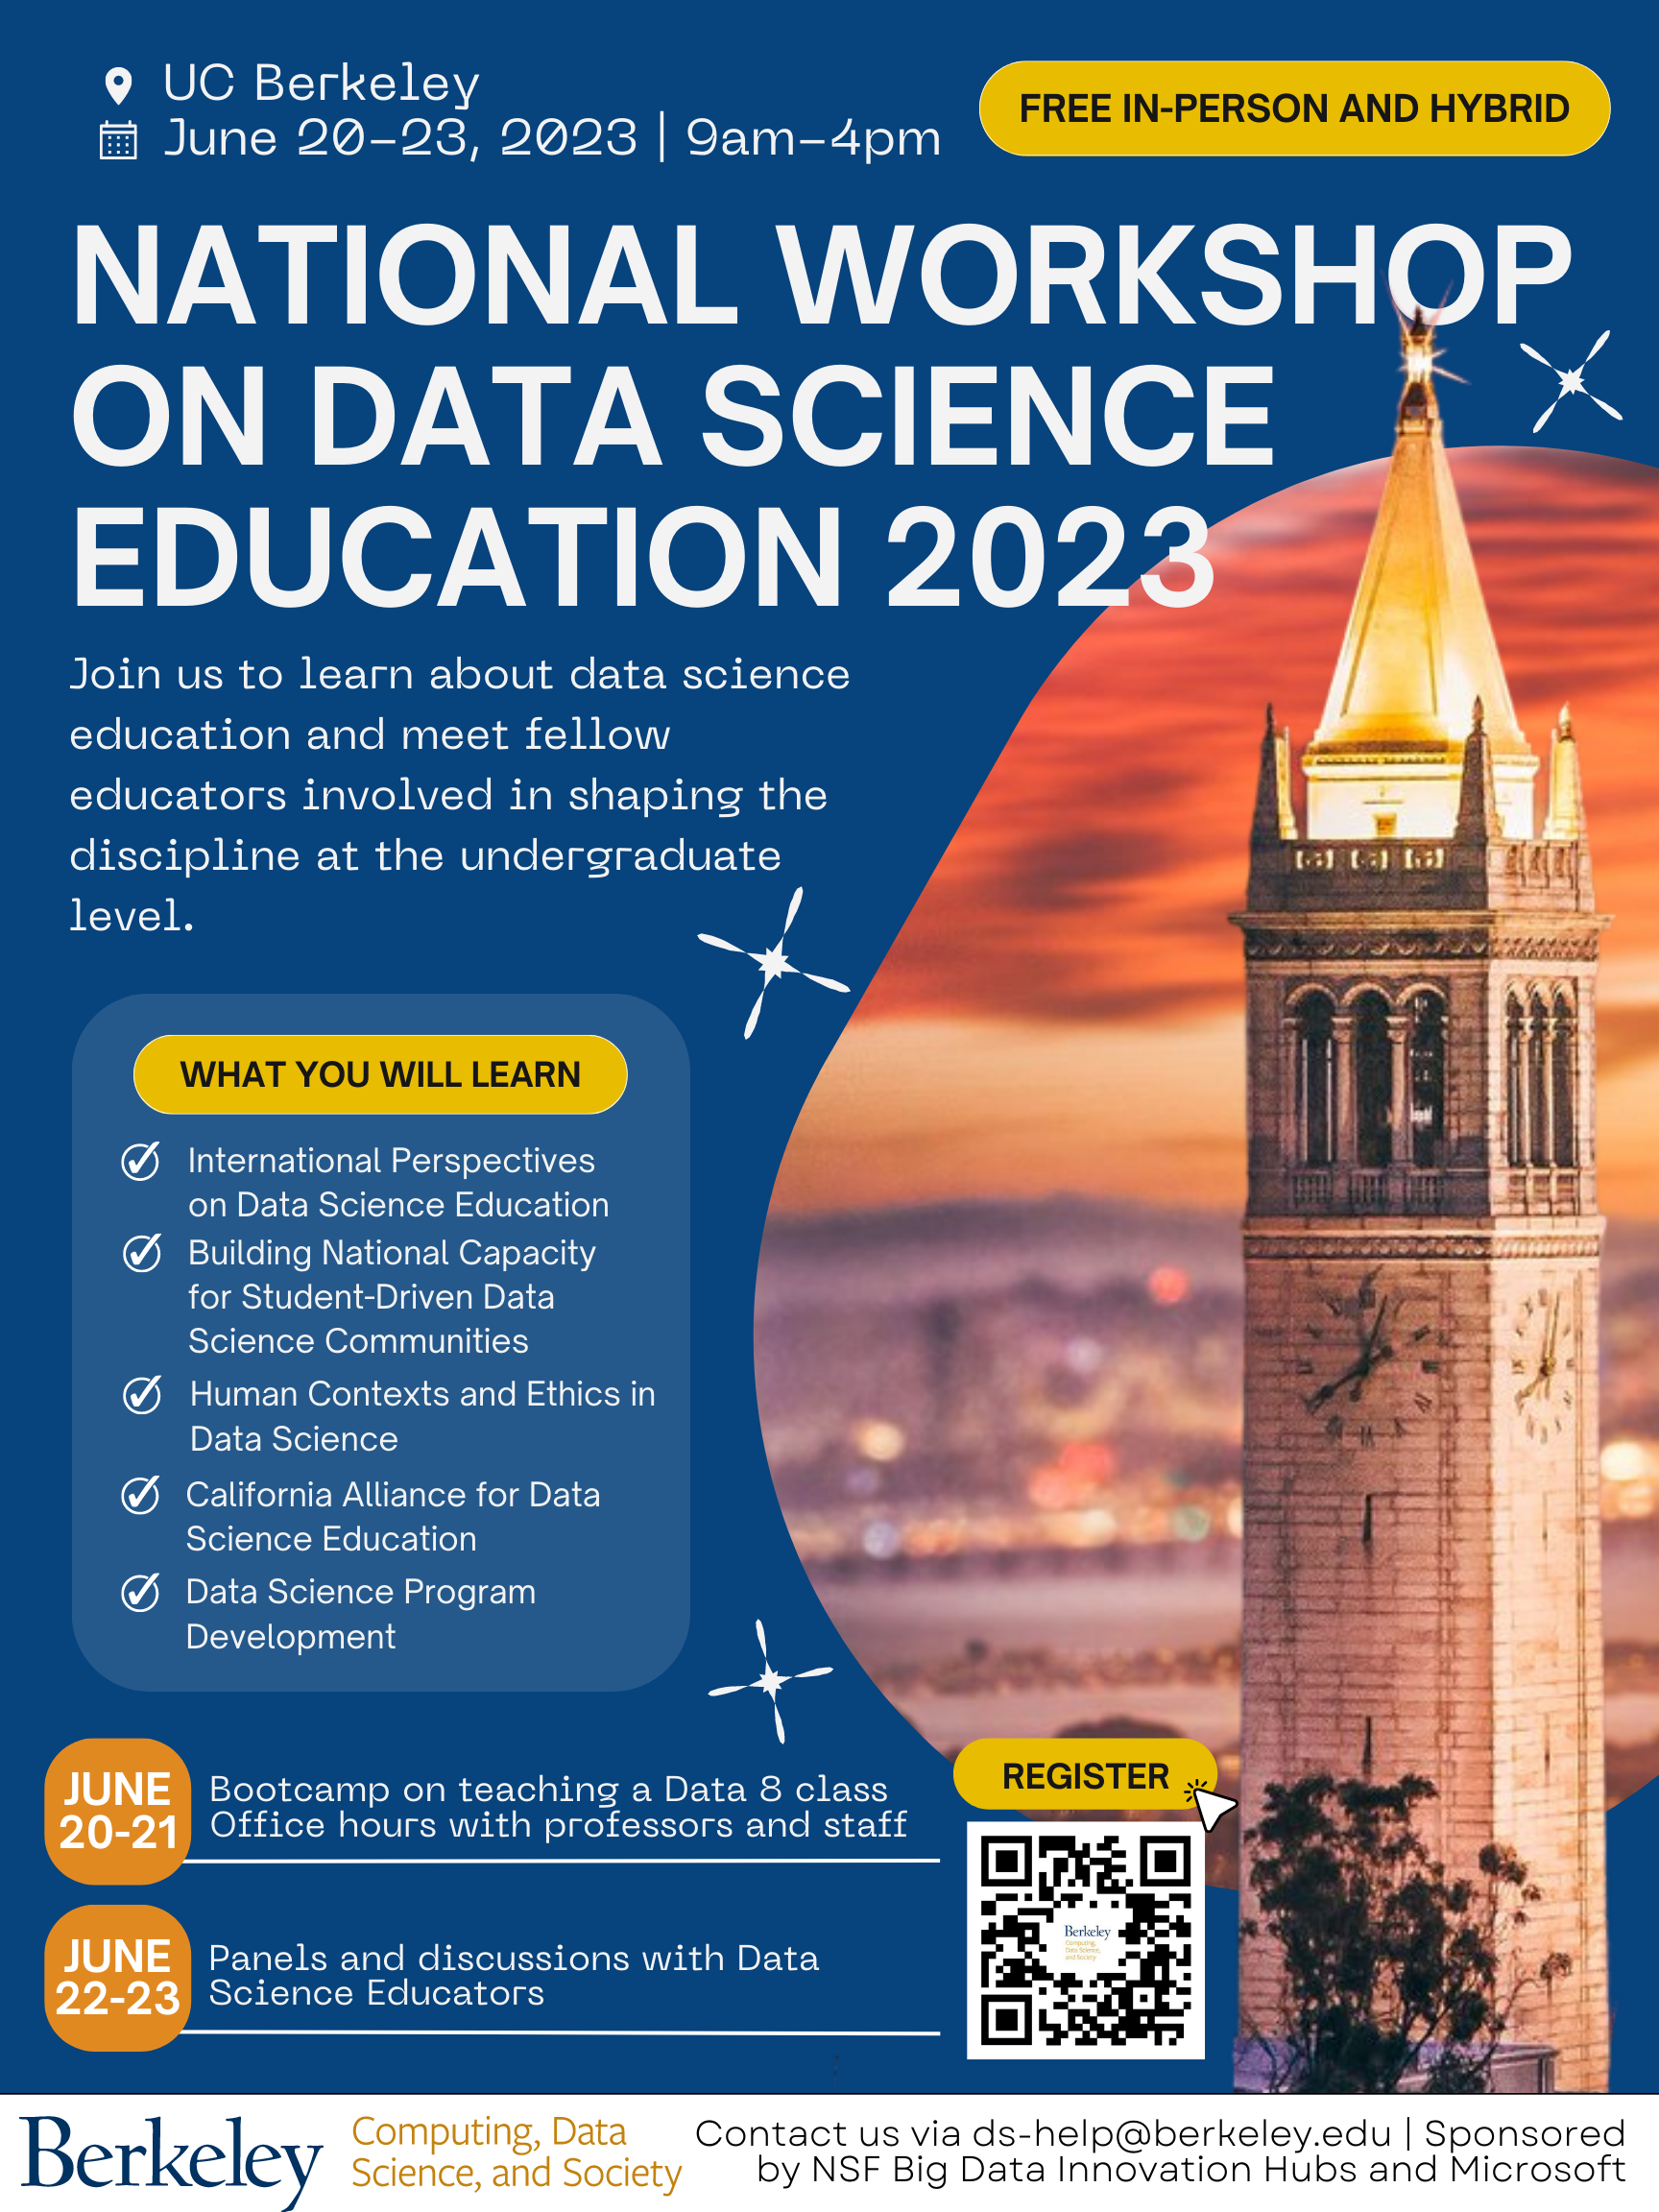 2023 National Workshop on Data Science Education 2023 flyer